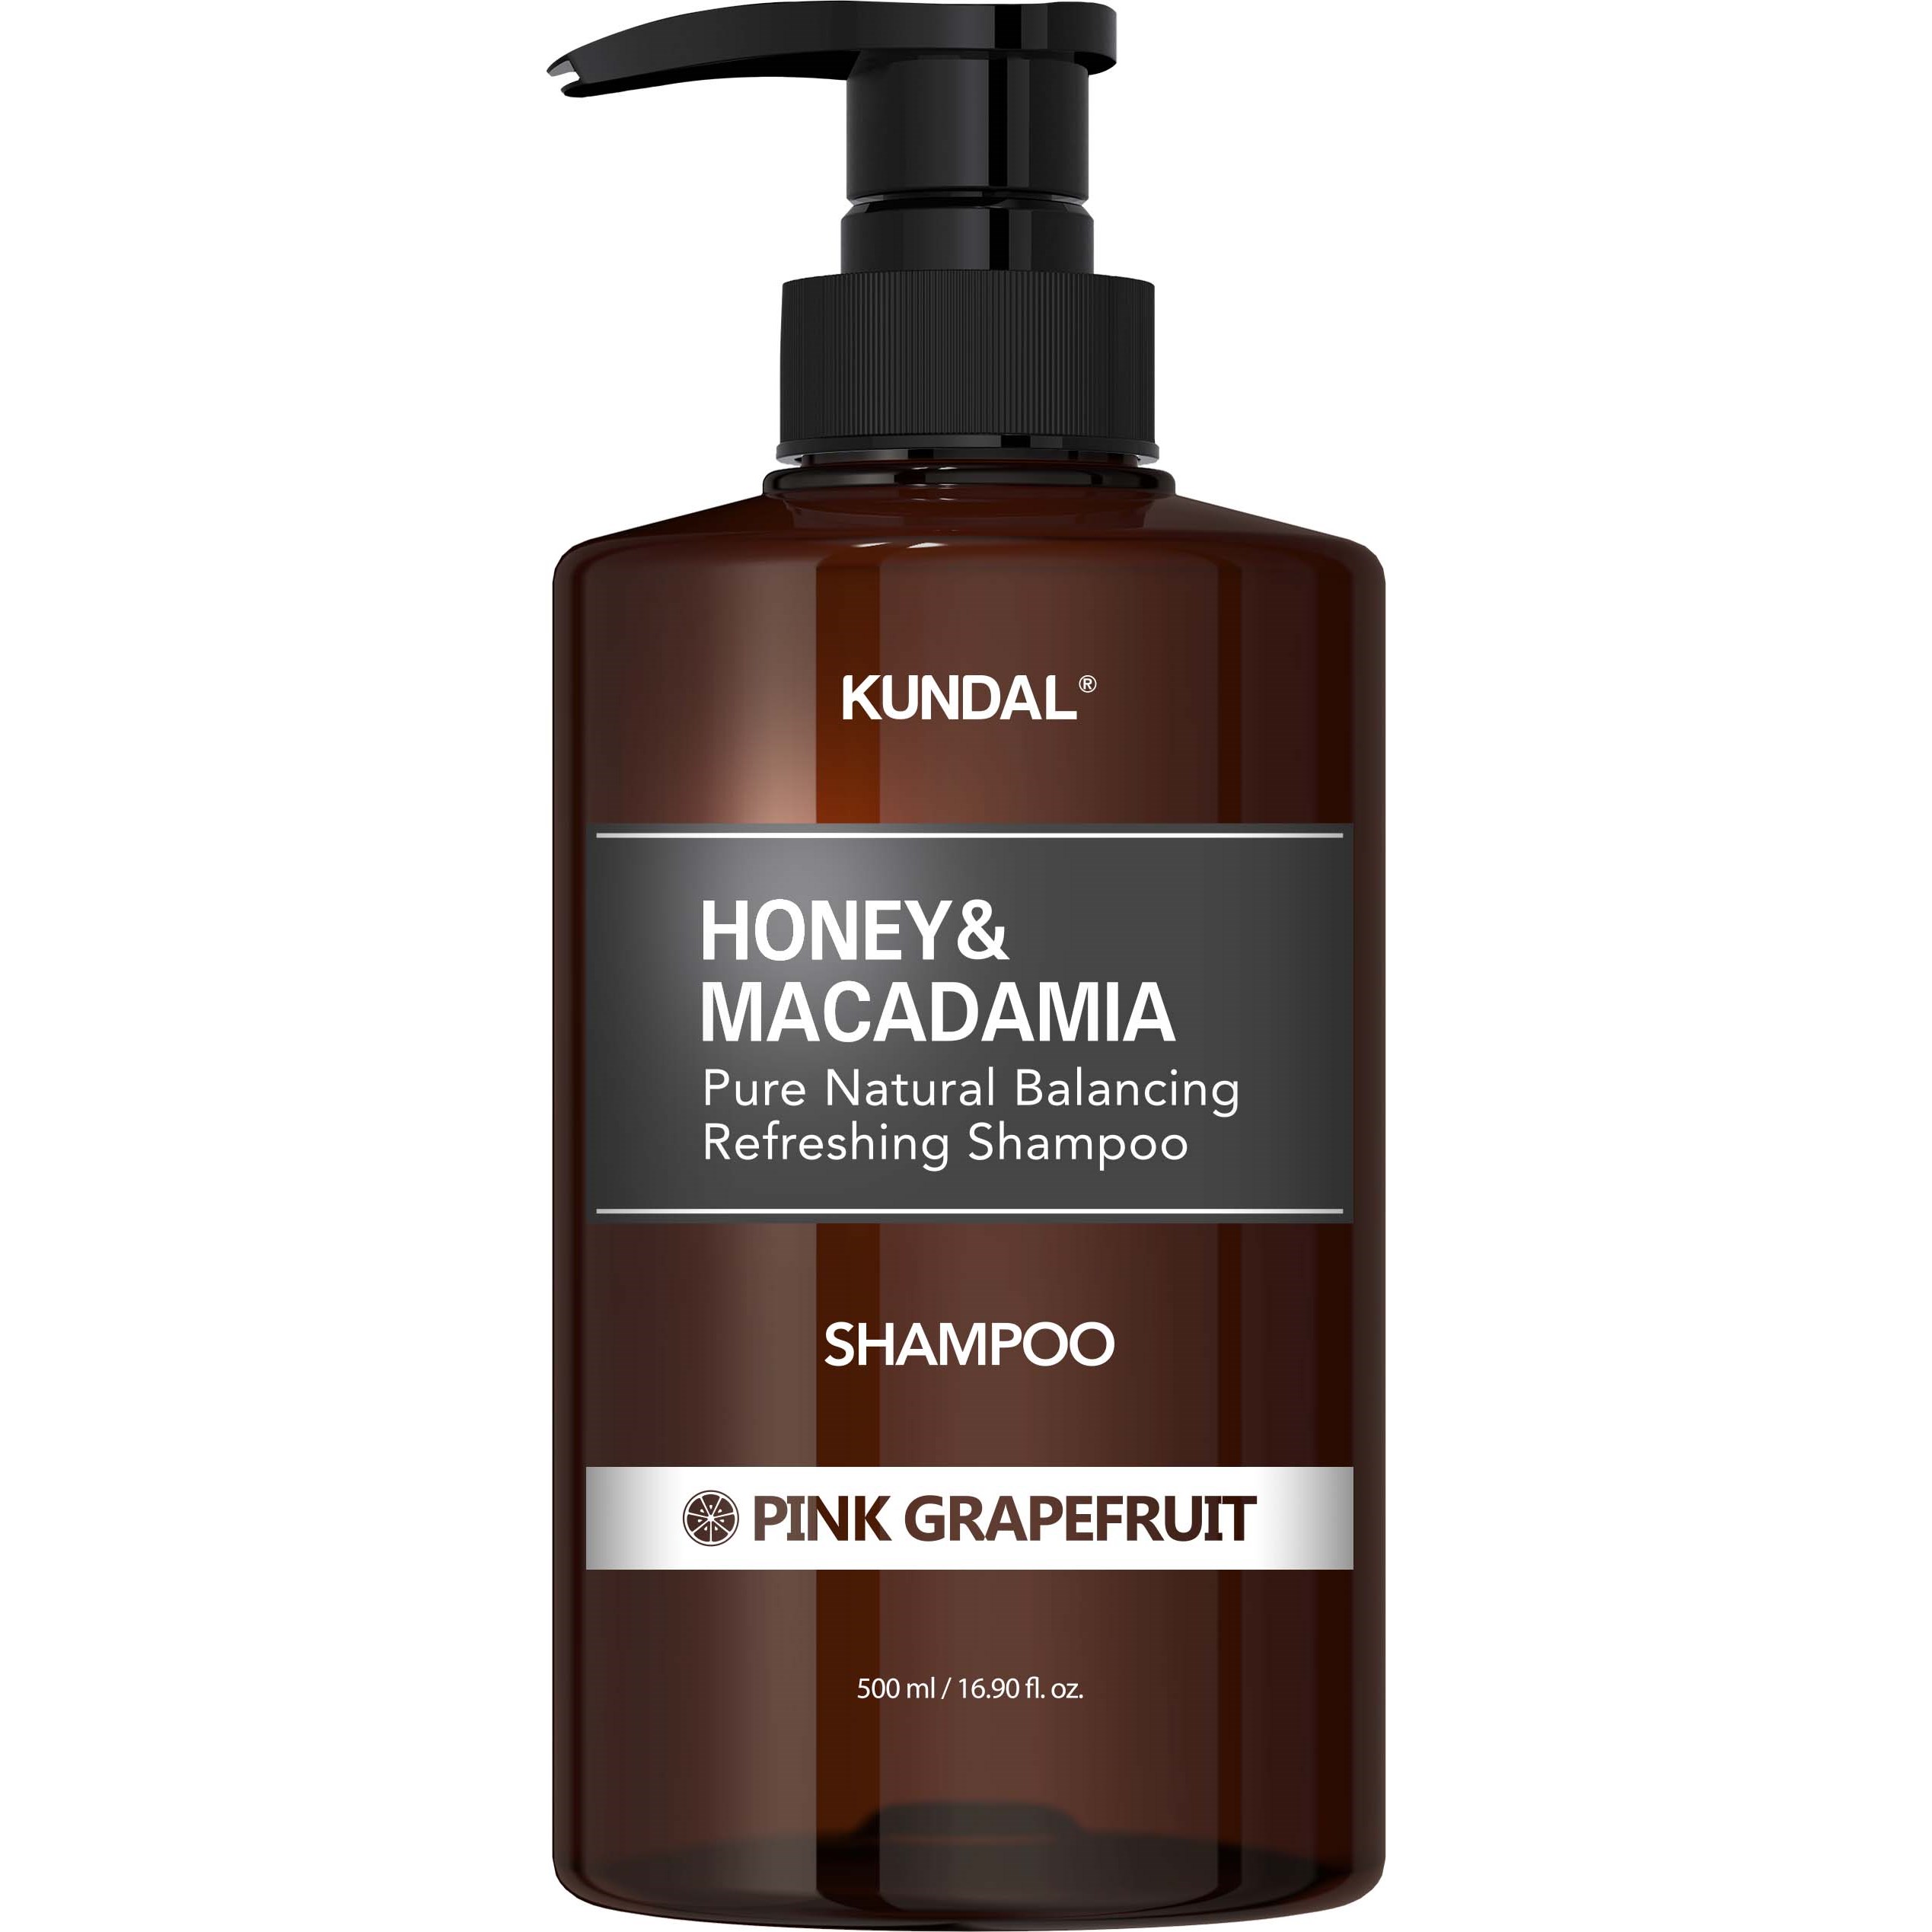 Kundal Honey & Macadamia Shampoo Pink Grapefruit 500 ml